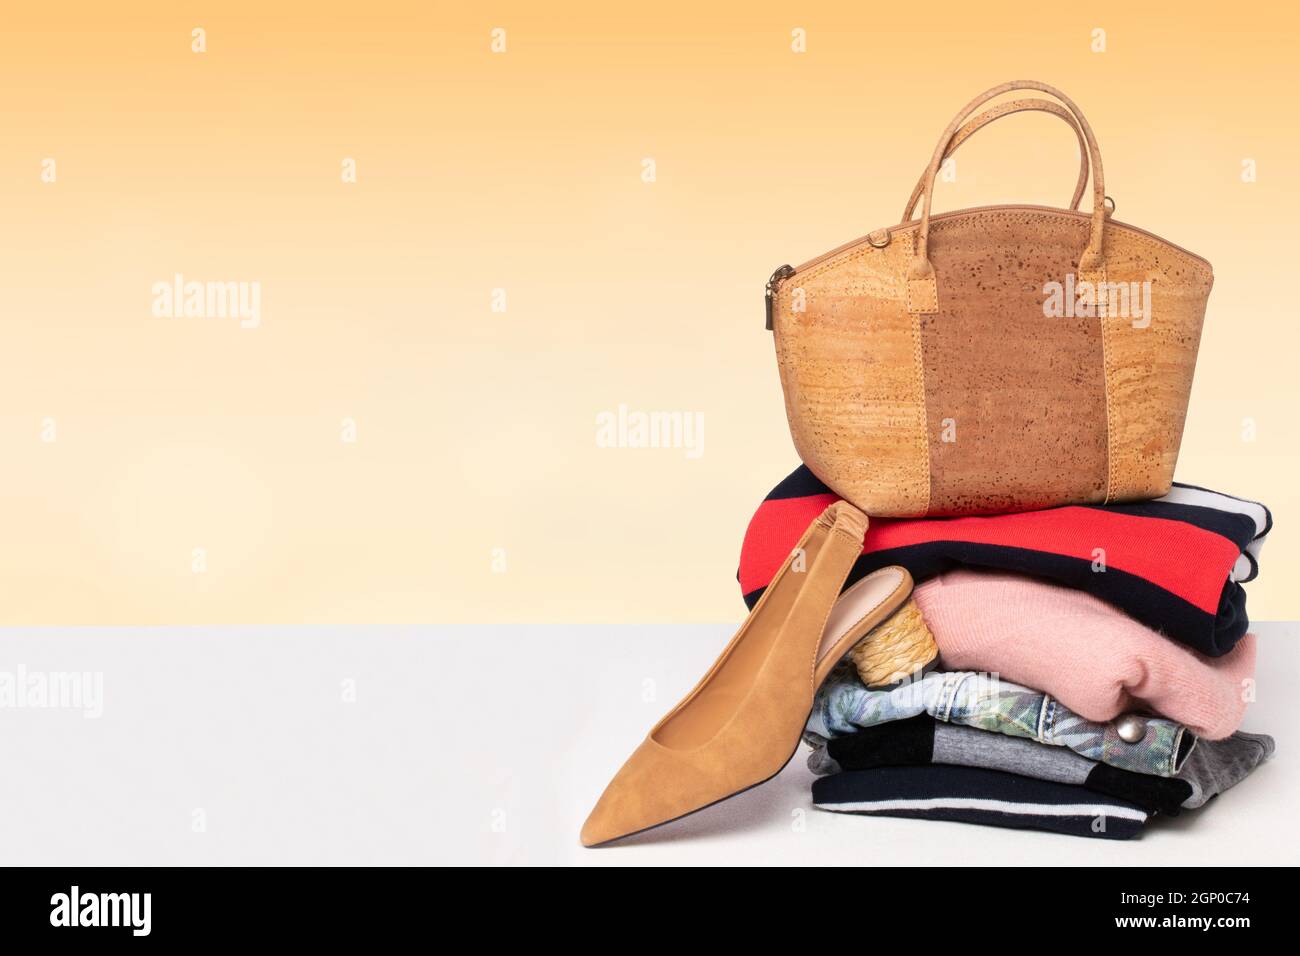 Cork Handbags For Sale Lagos Portugal Stock Photo - Download Image Now -  Algarve, Bag, Cork - Material - iStock